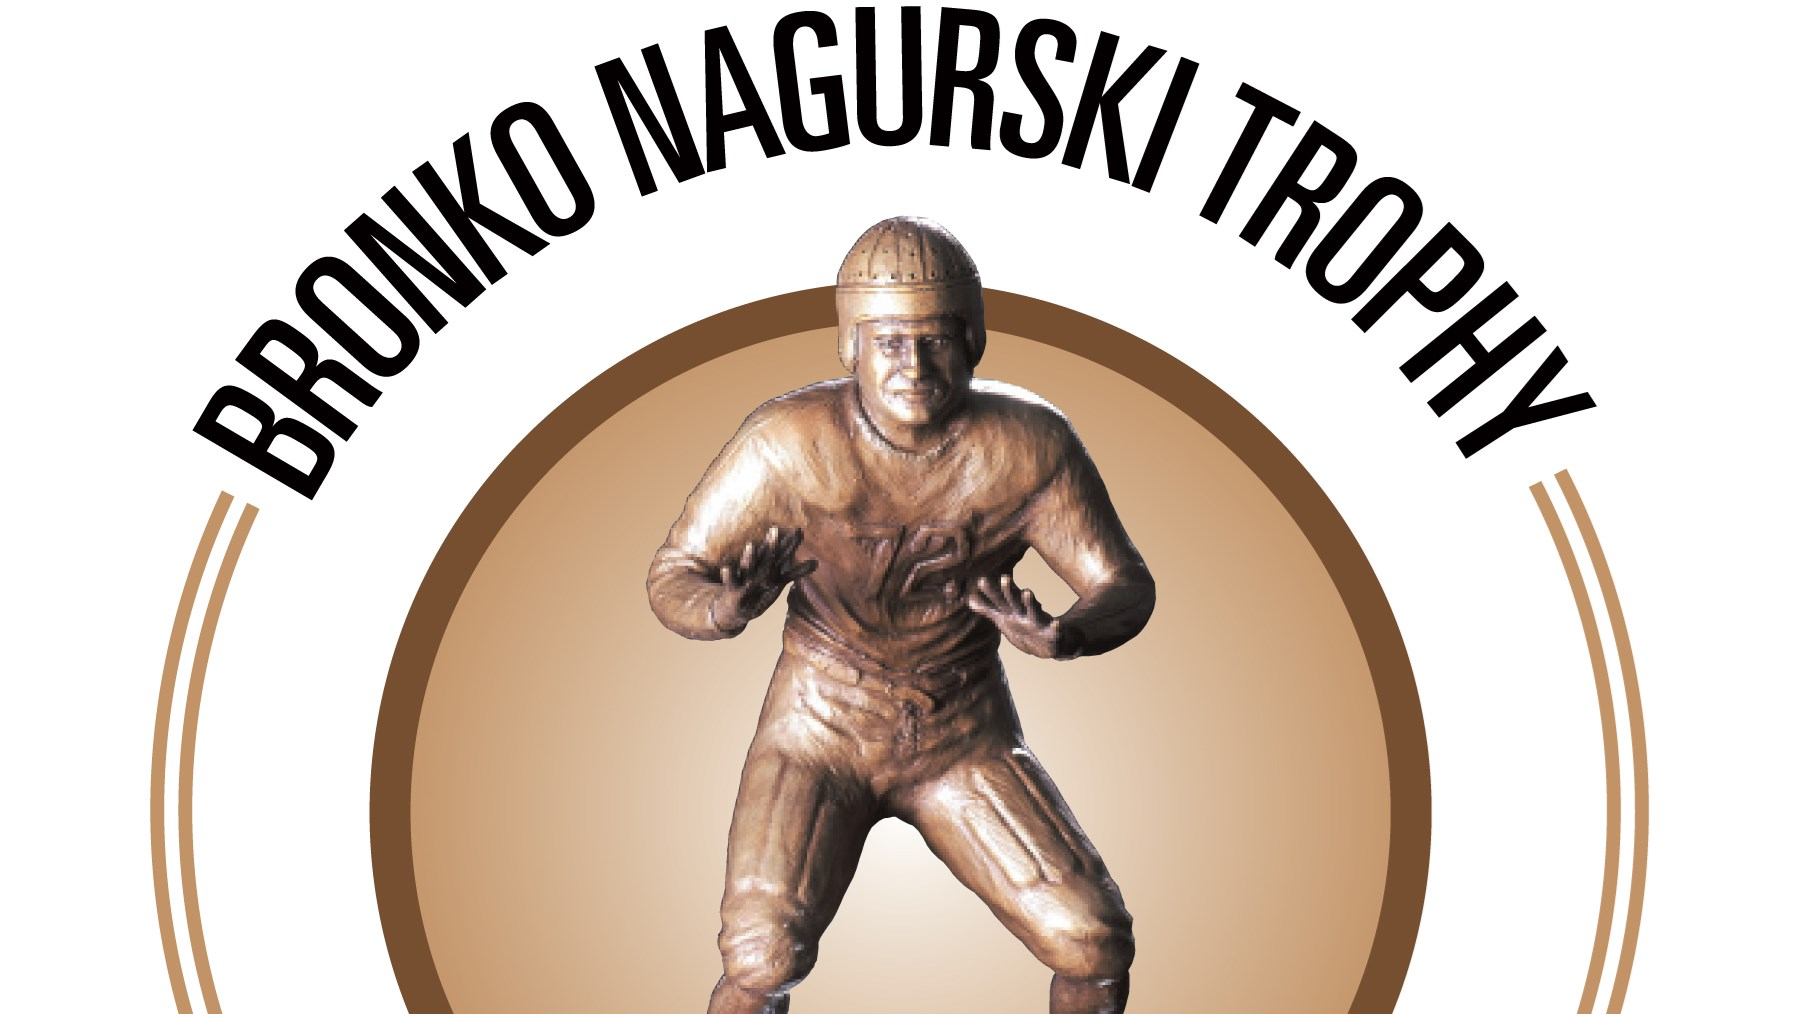 Enagbare Named to Bronko Nagurski Trophy Watch List